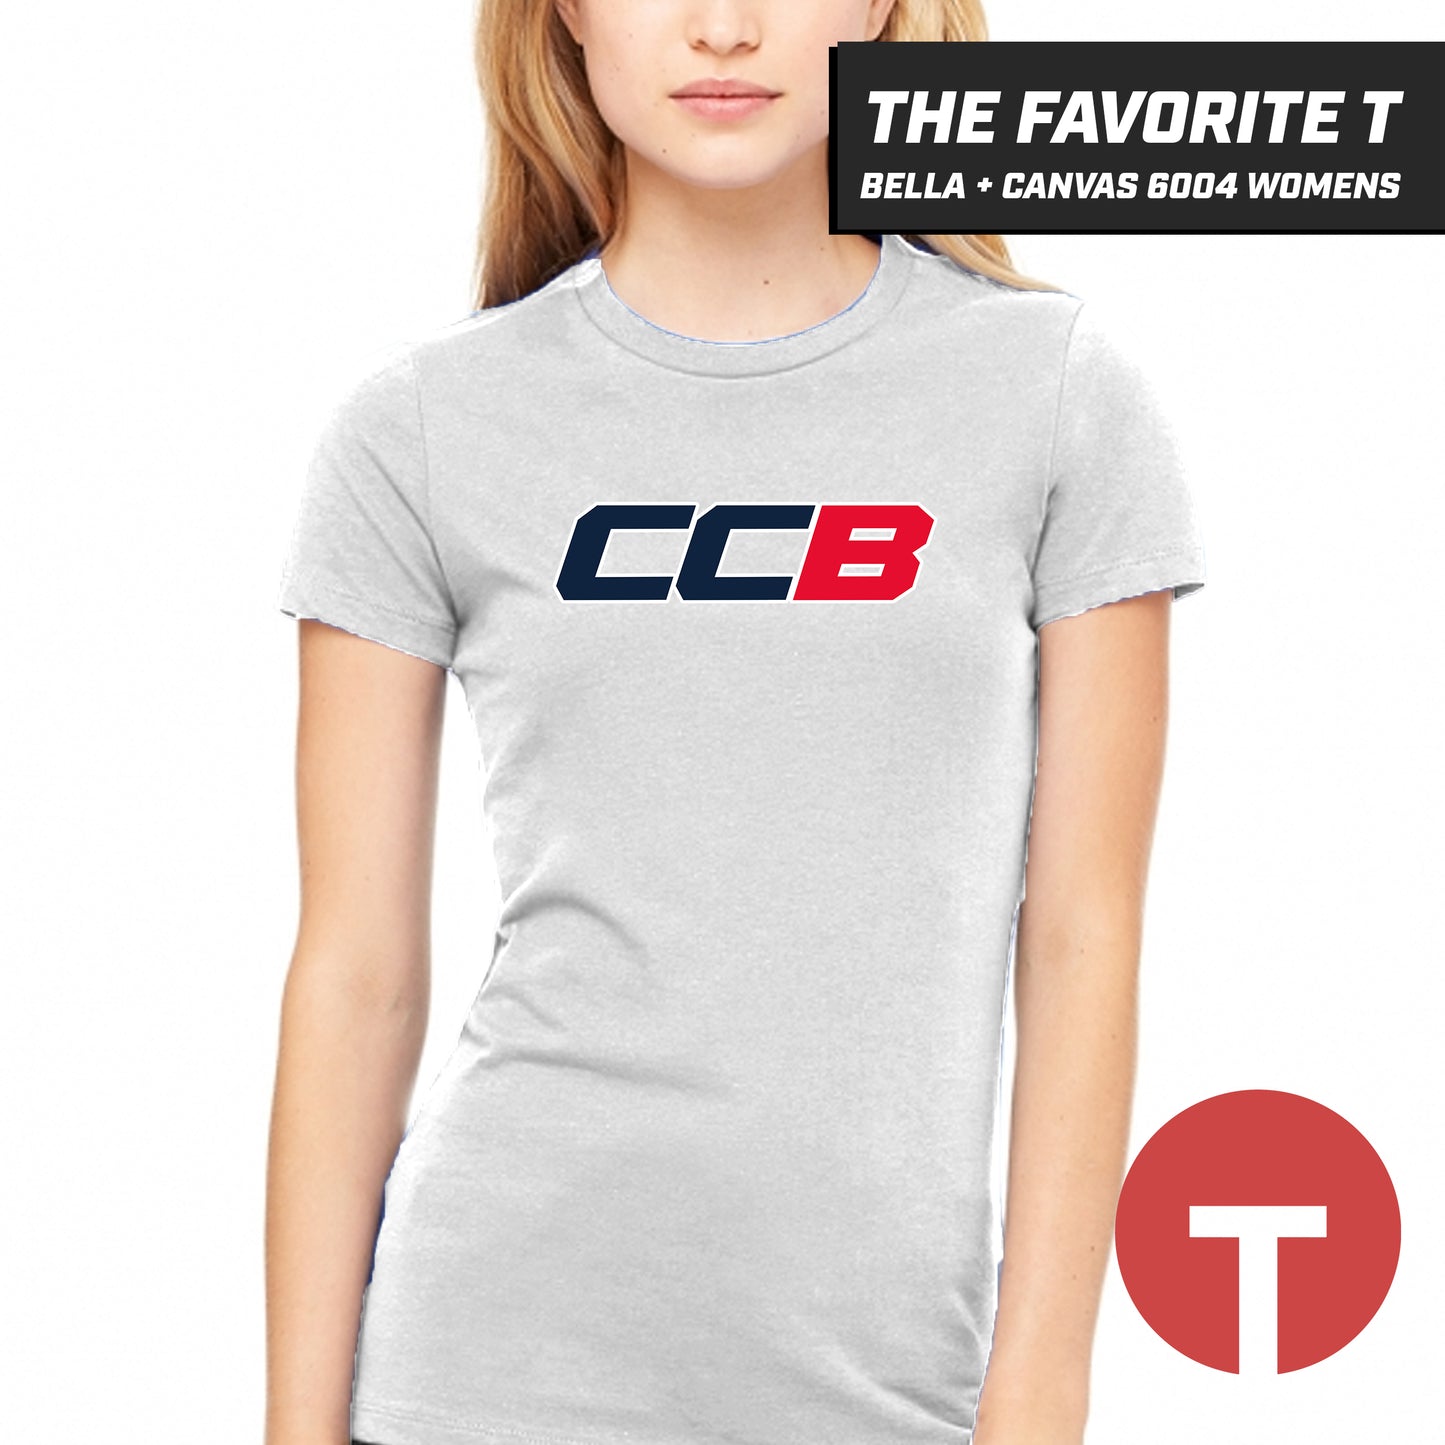 CCB - Bella+Canvas 6004 Womens "Favorite T"